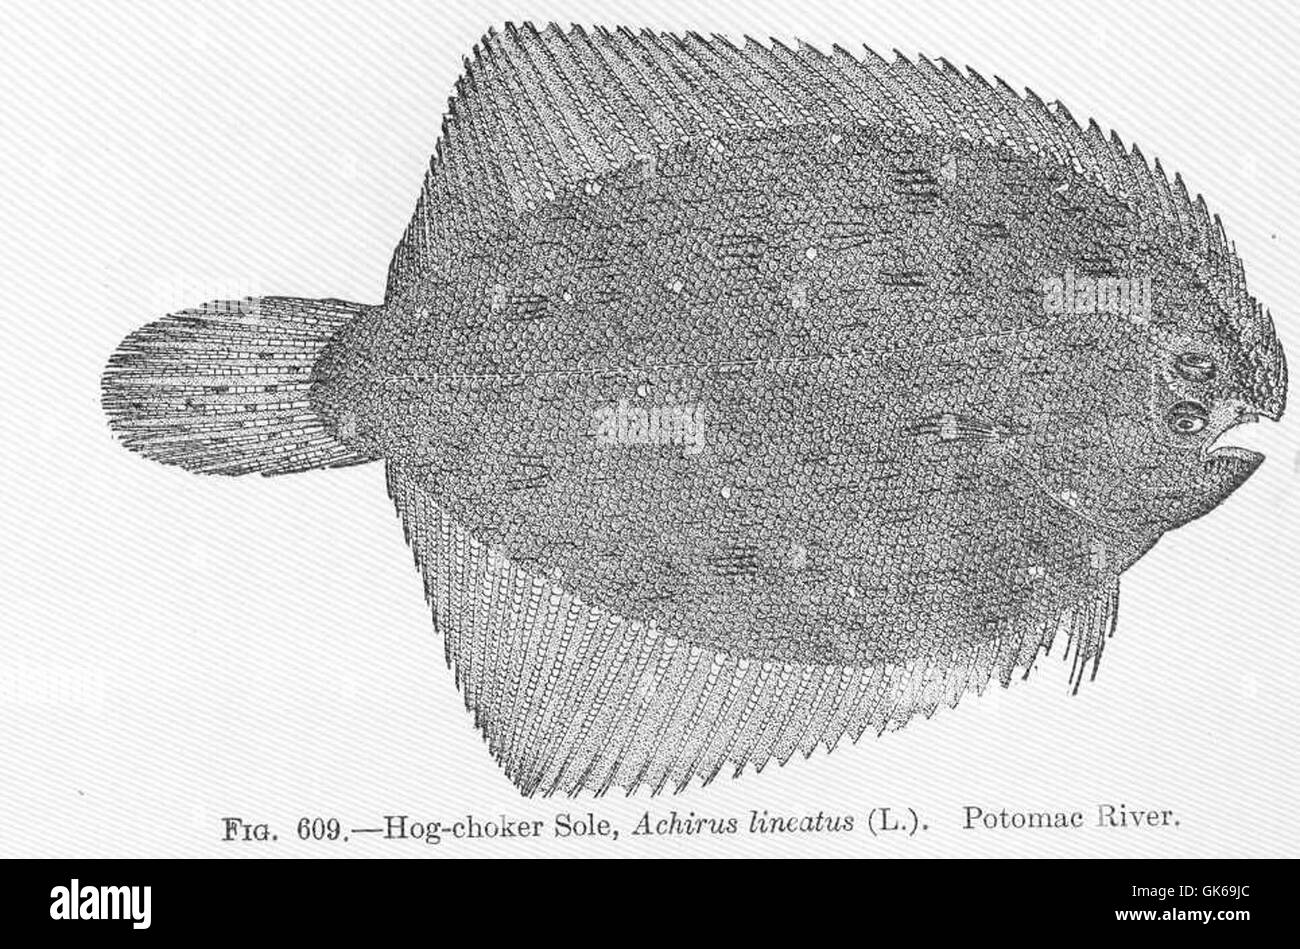 52178 Hog-choker Sole, Achirus lineatus (L) Potomac River Stock Photo